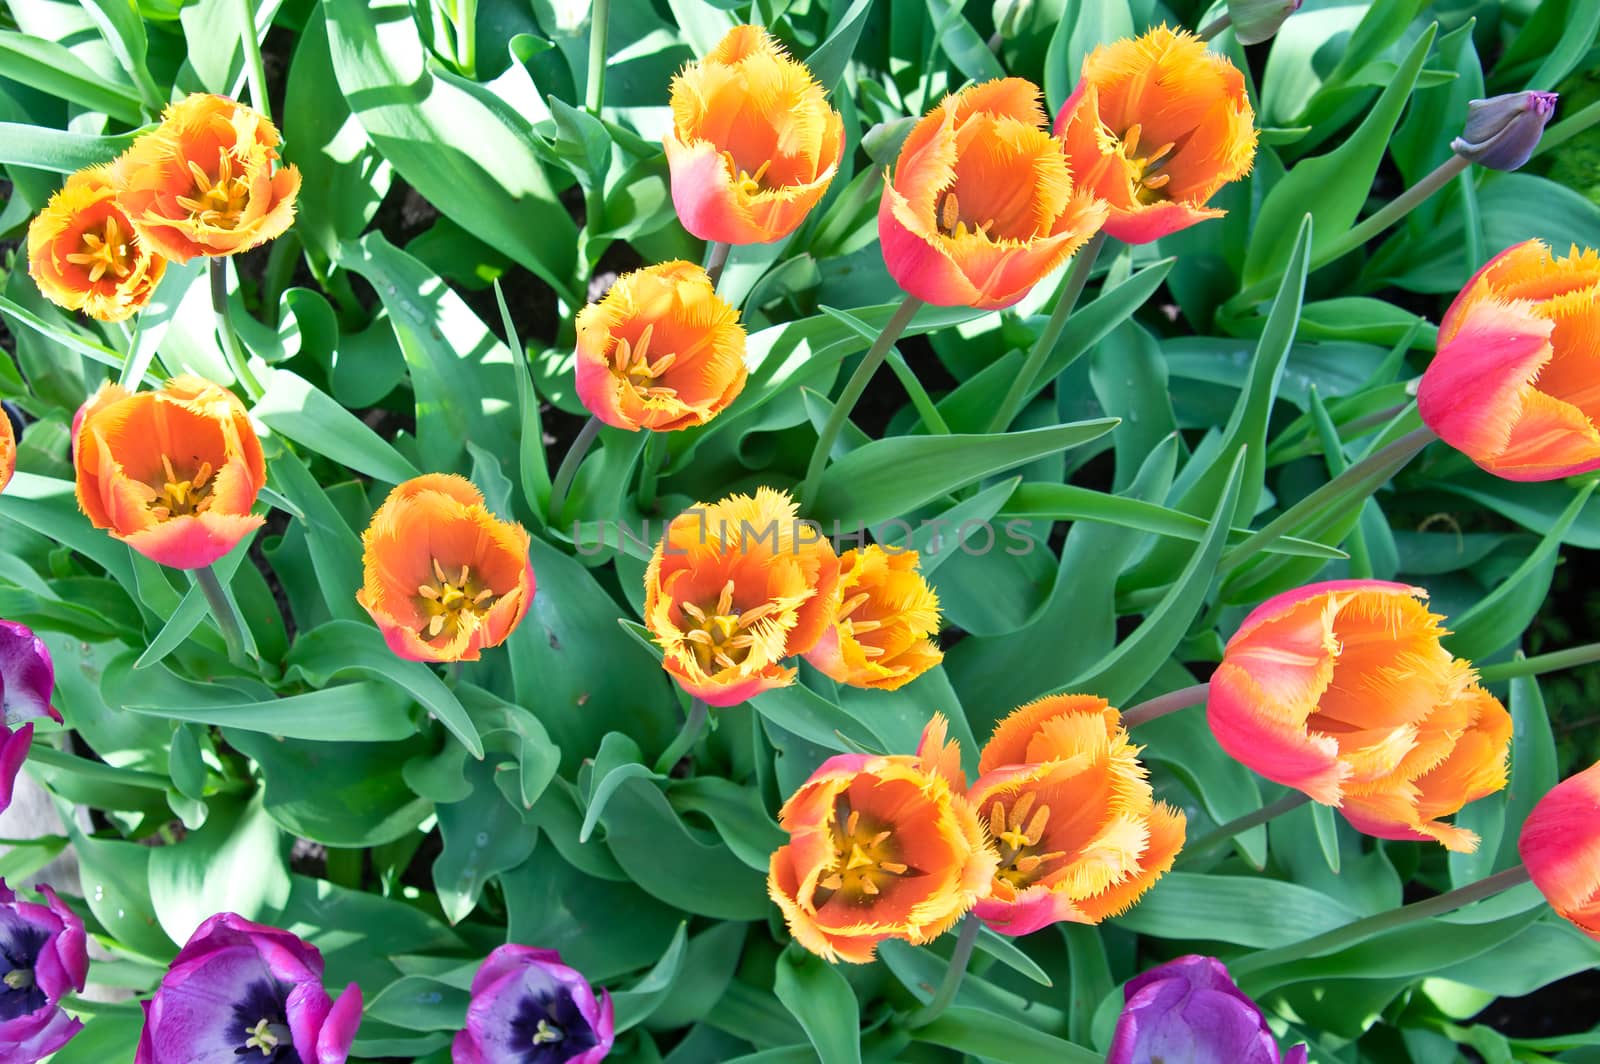 Orange tulips in flower bed in park